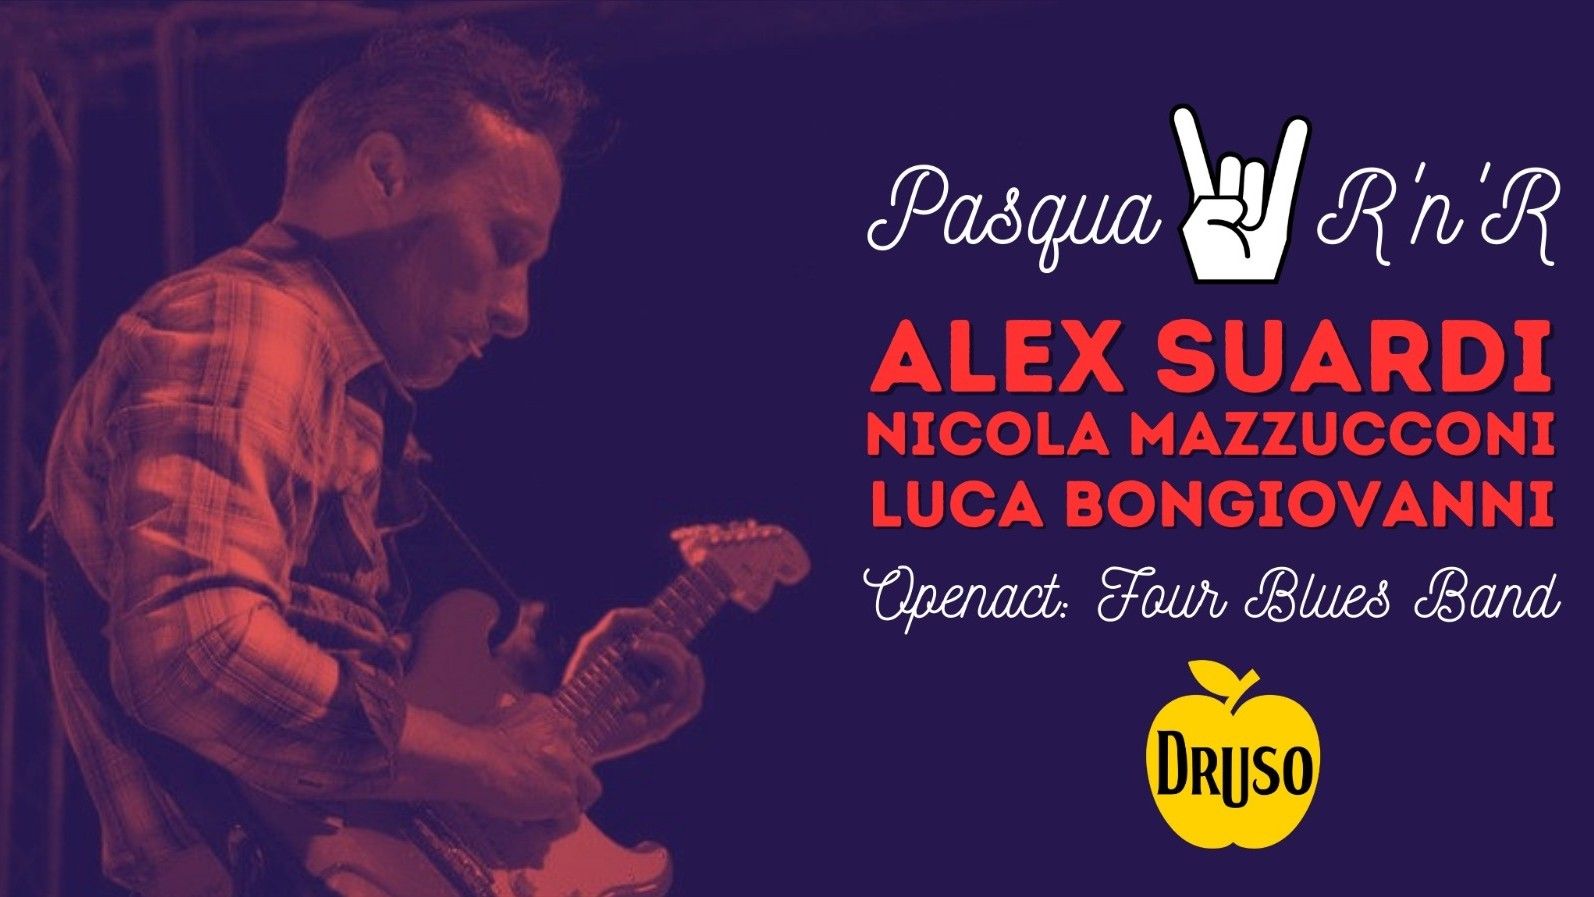 Alex Suardi Band - Pasqua Rock’n’roll